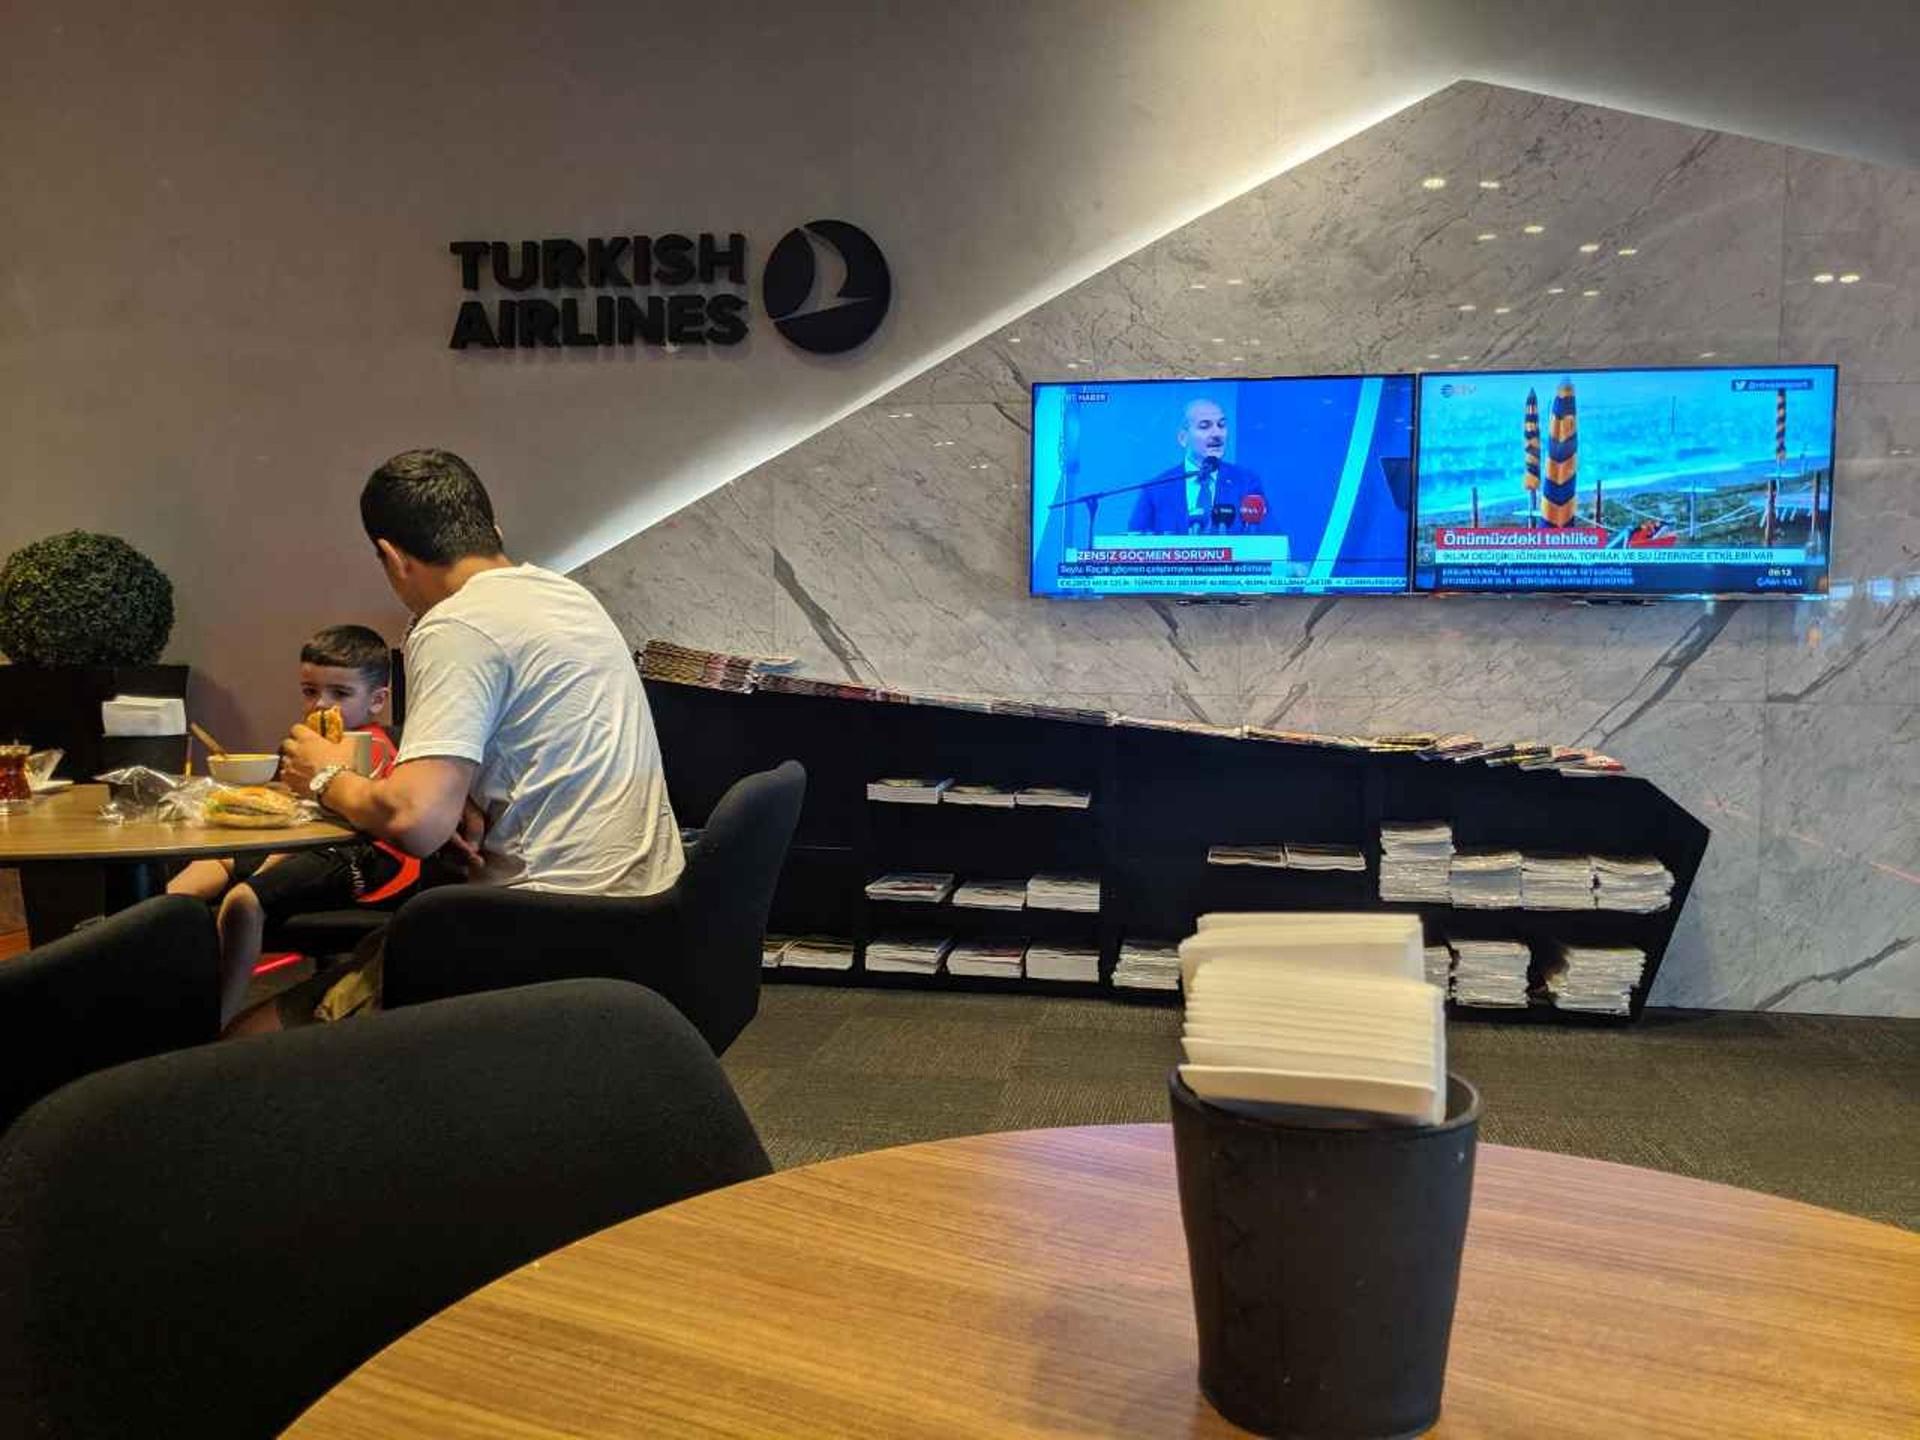 Turkish Airlines Lounge Sabiha Gokcen (Domestic Business Lounge) image 3 of 3